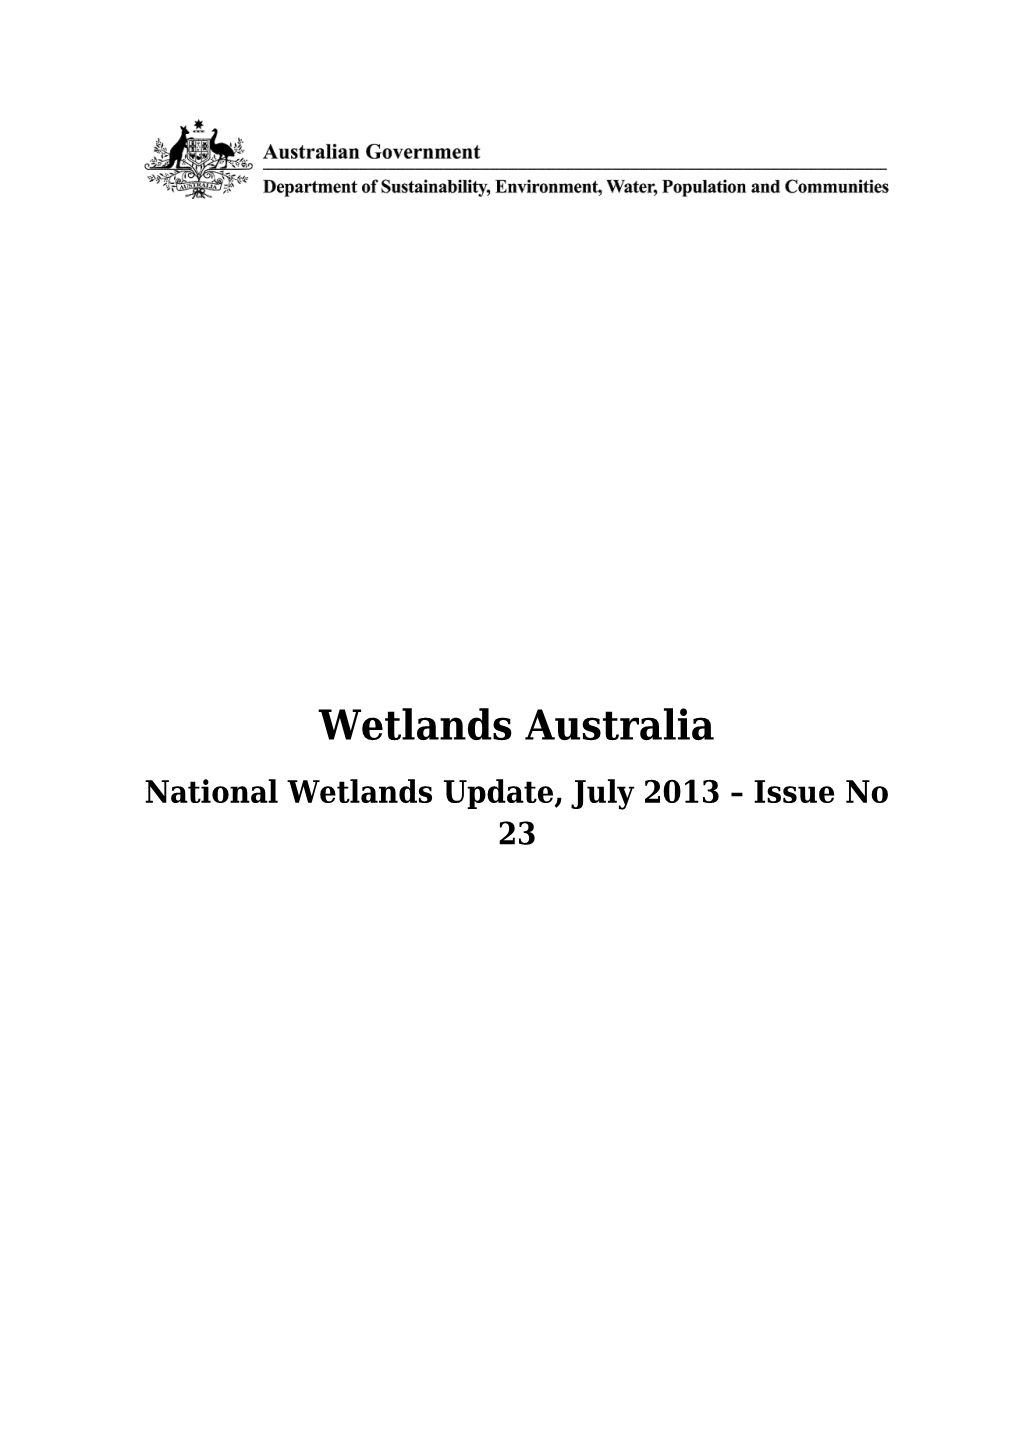 Wetlands Australia National Wetlands Update, July 2013 Issue No 23